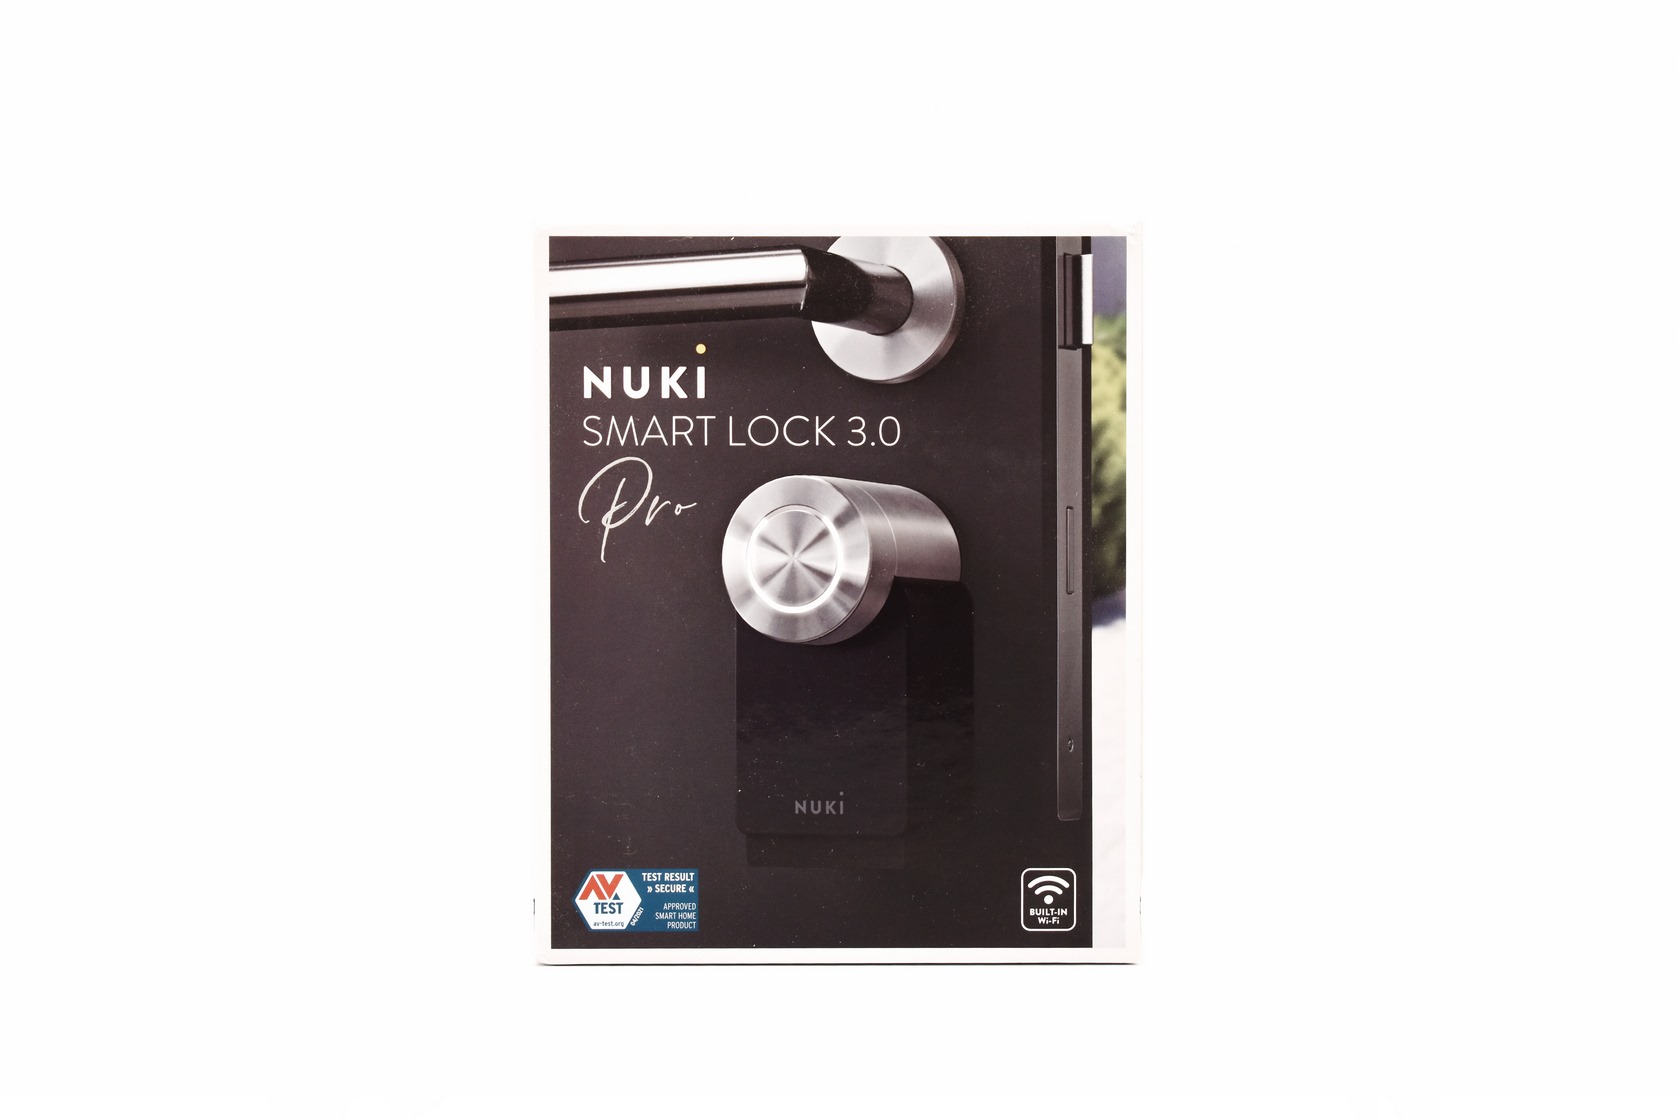 Nuki Smart Lock 3.0 Offers Improvements